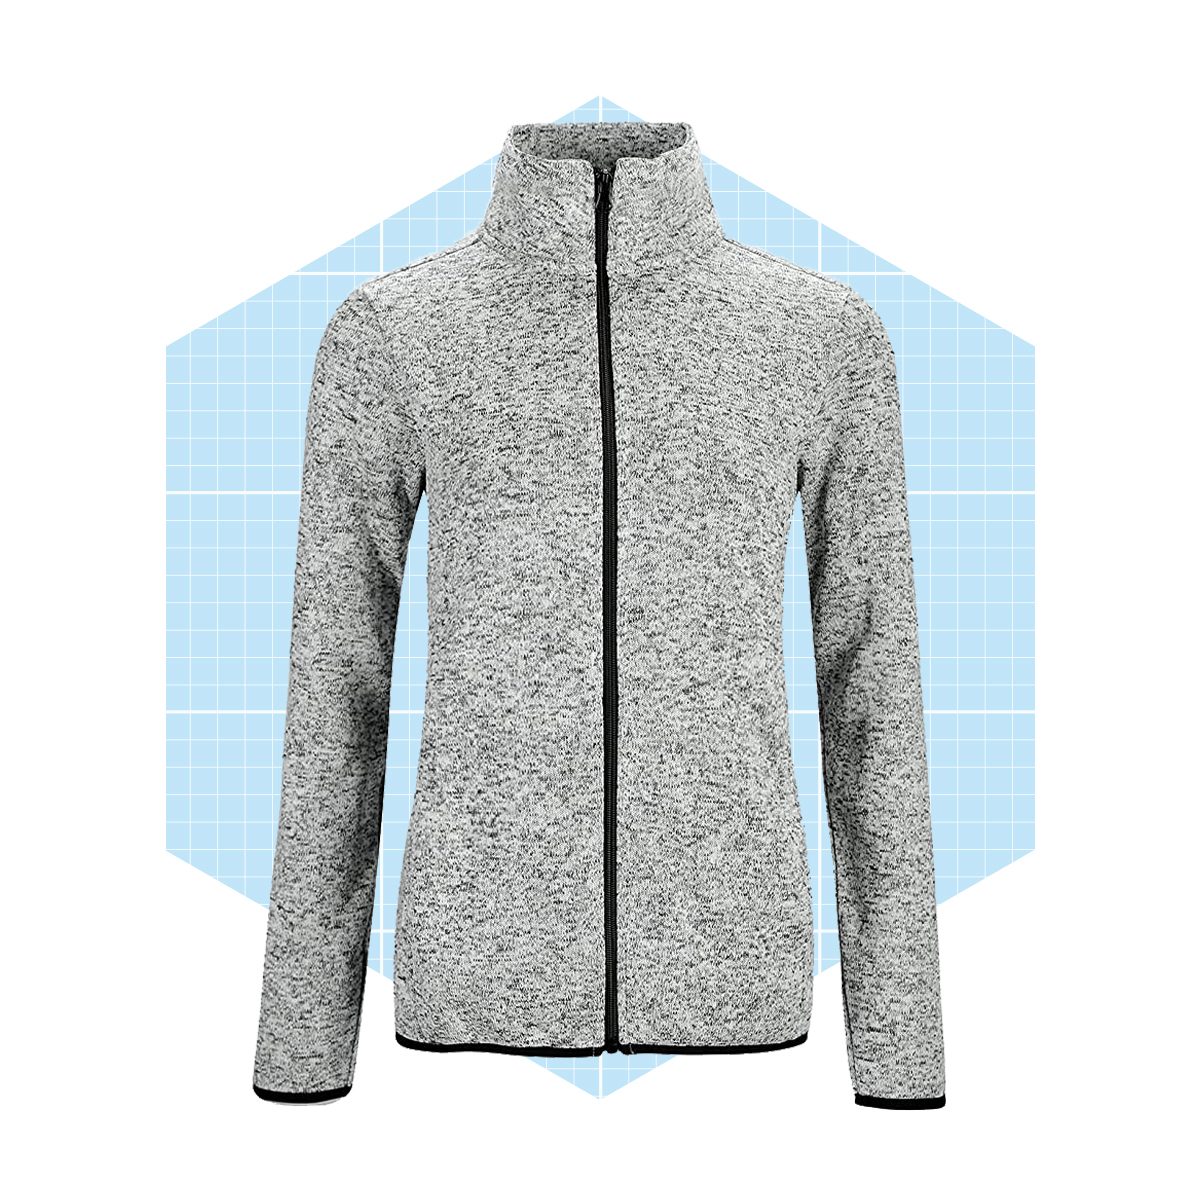 Dolcevida Women's Long Sleeve Sweater Fleece Zip Up Speckled Jacket With Pockets Ecomm Amazon.com